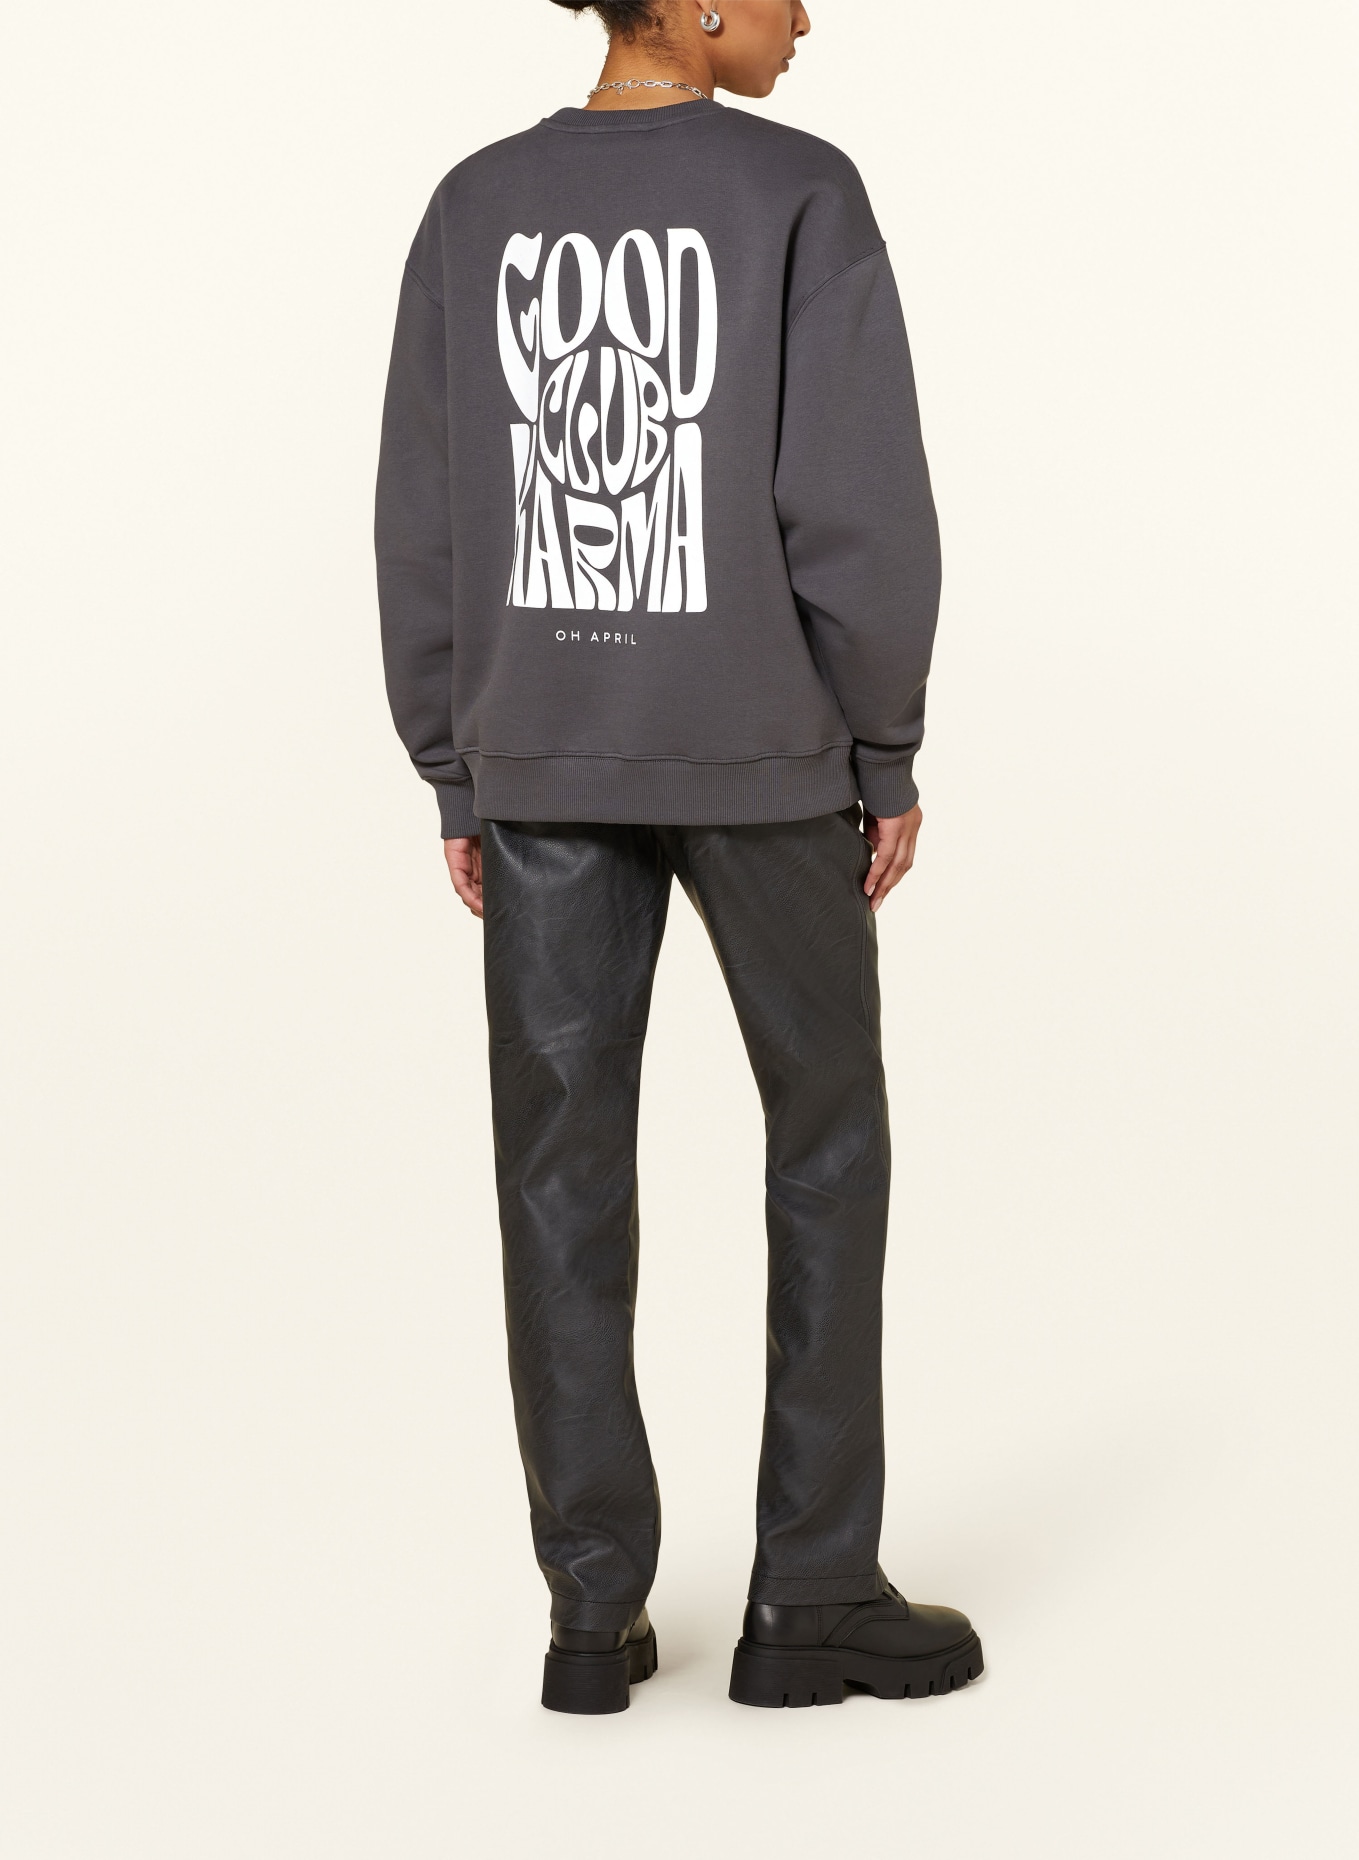 OH APRIL Oversized-Sweatshirt, Farbe: GRAU/ WEISS (Bild 2)